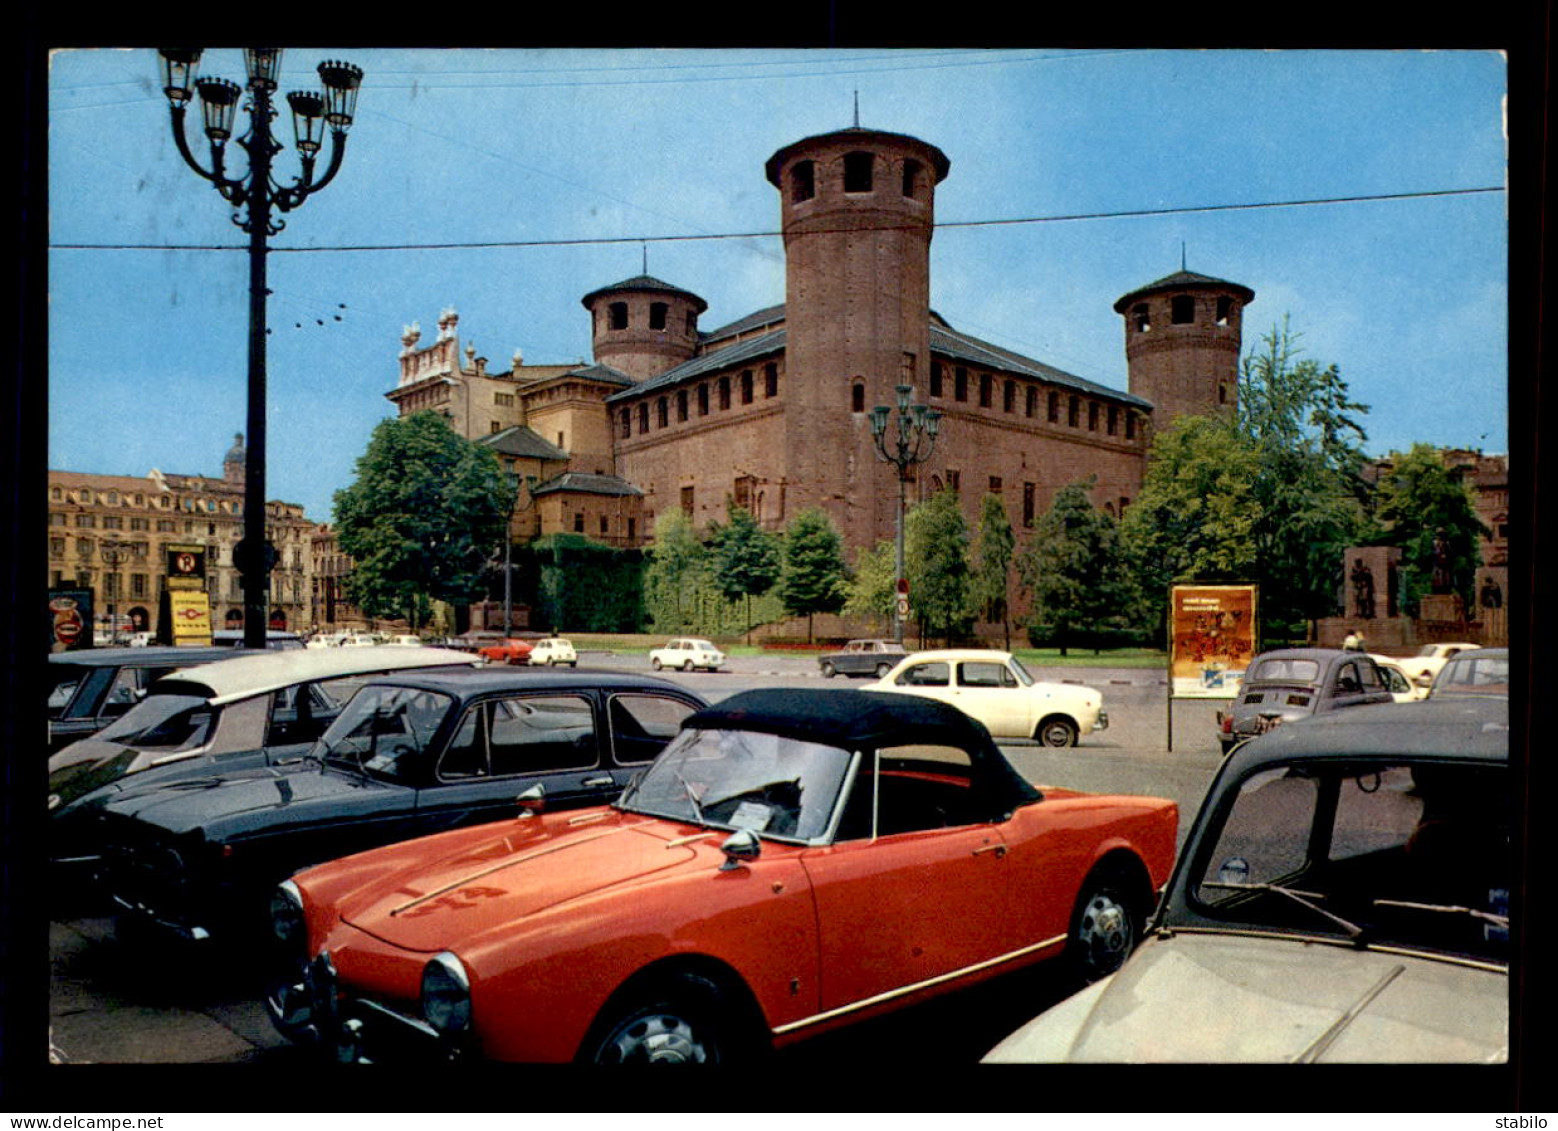 AUTOMOBILES - ALFA ROMEO CABRIOLET A TURIN - Passenger Cars